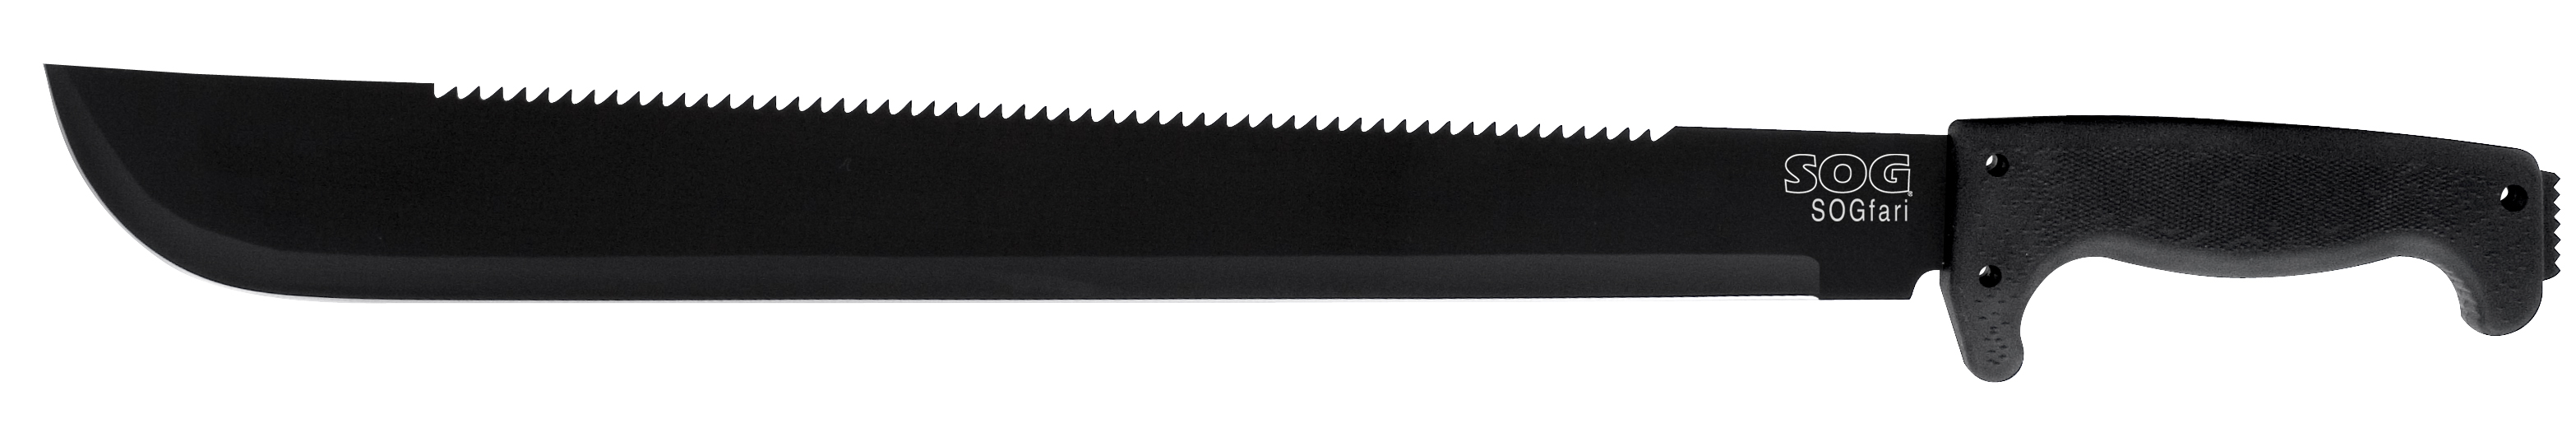 opplanet-sog-knives-mc02-n-sogfari-machete-knife-main